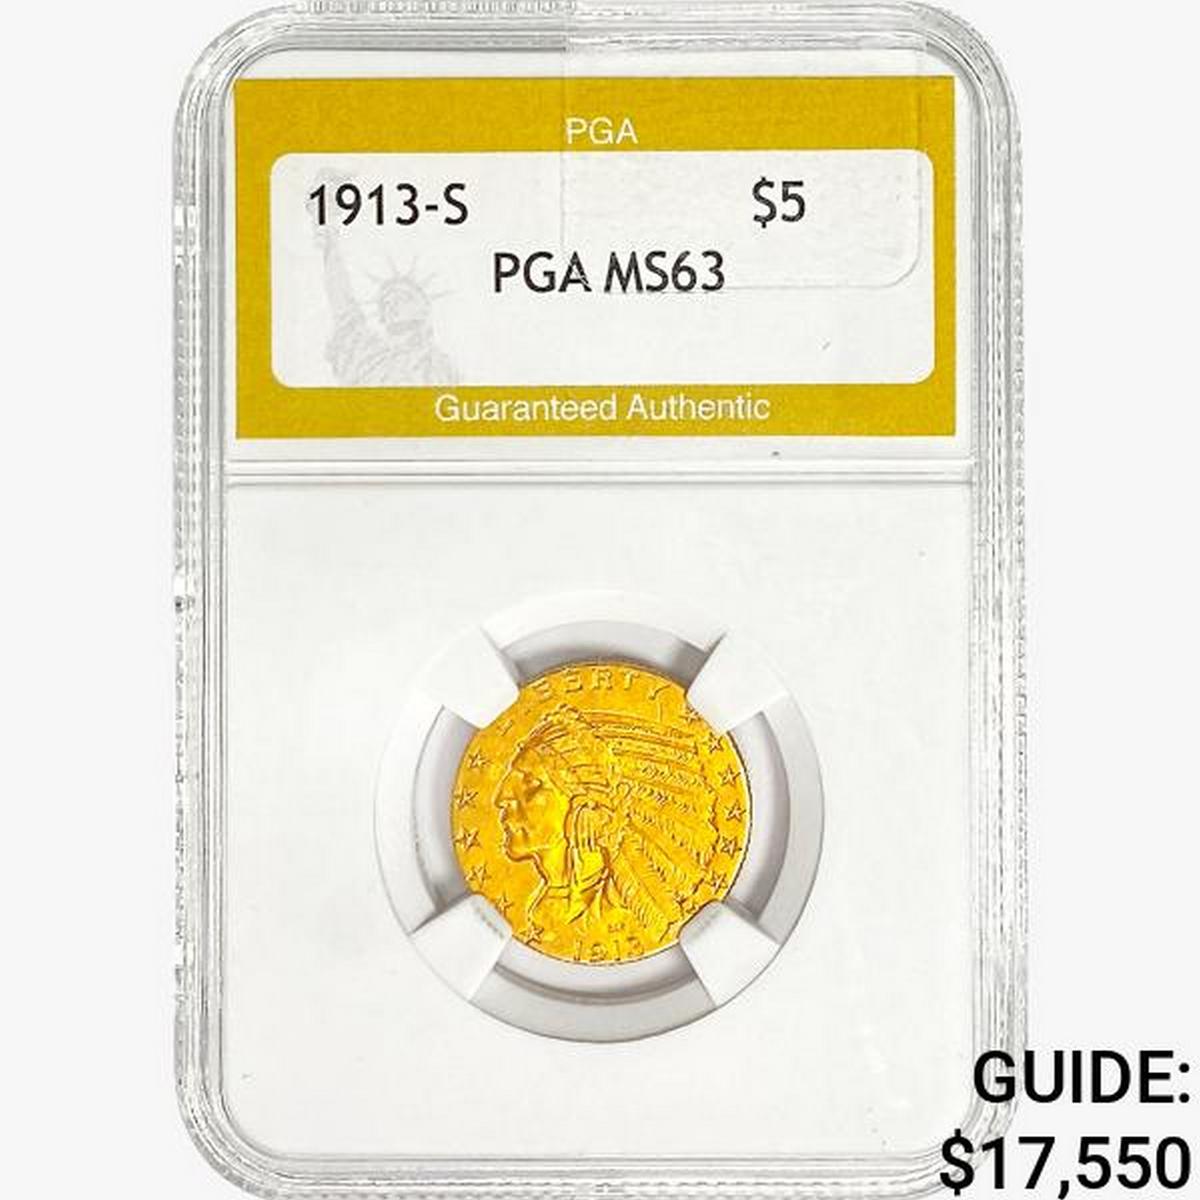 1913-S $5 Gold Half Eagle PGA MS63